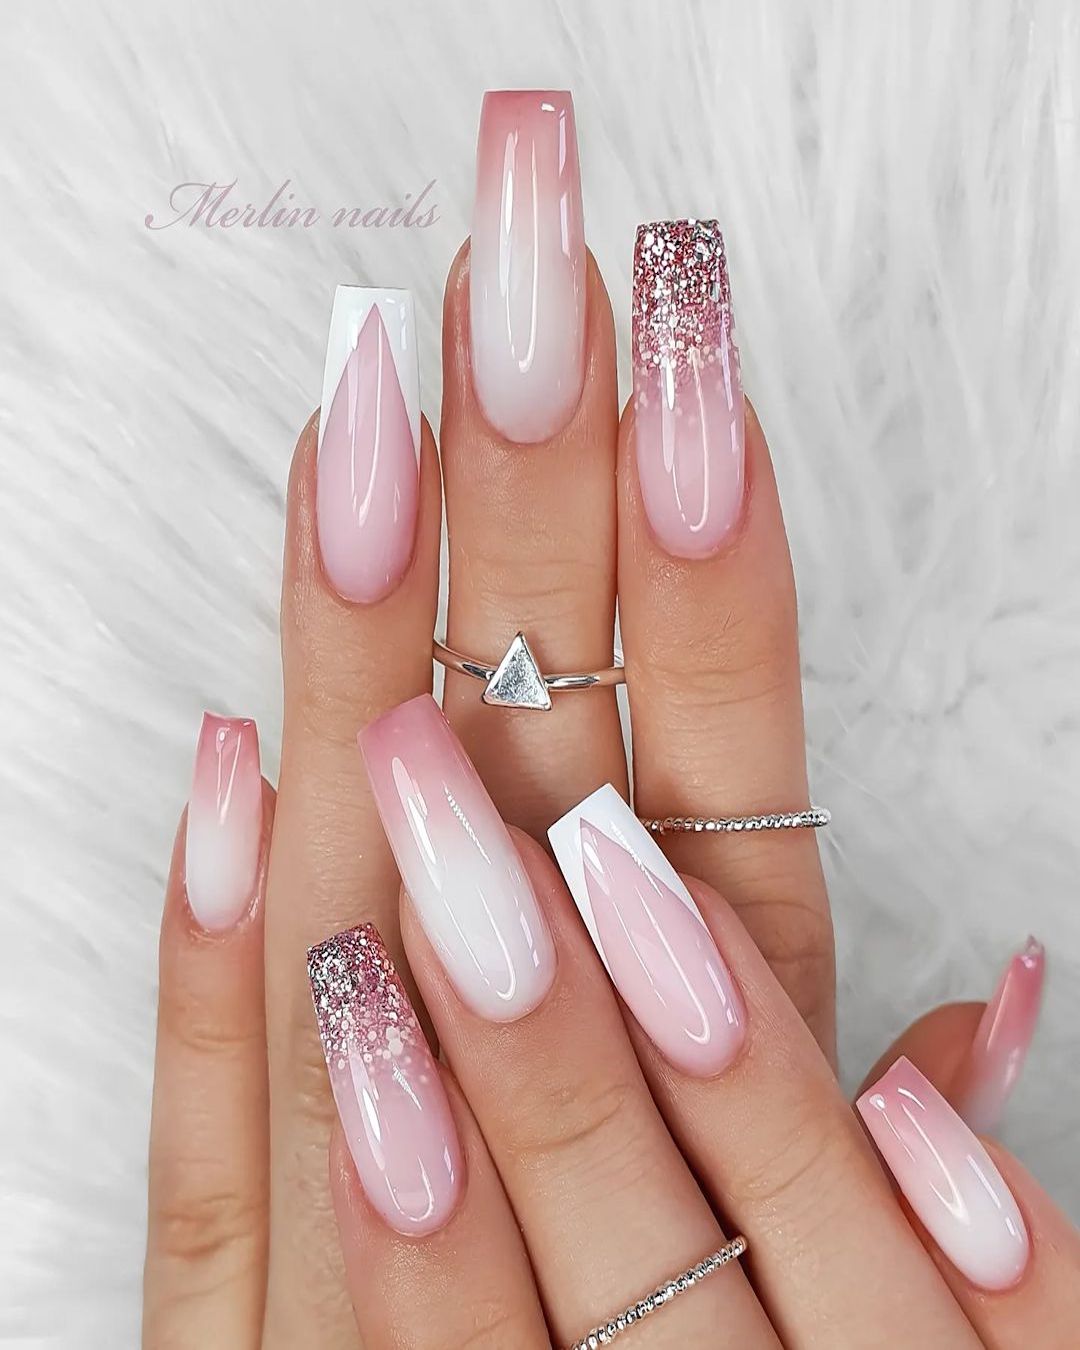 rose gold wedding nails designs